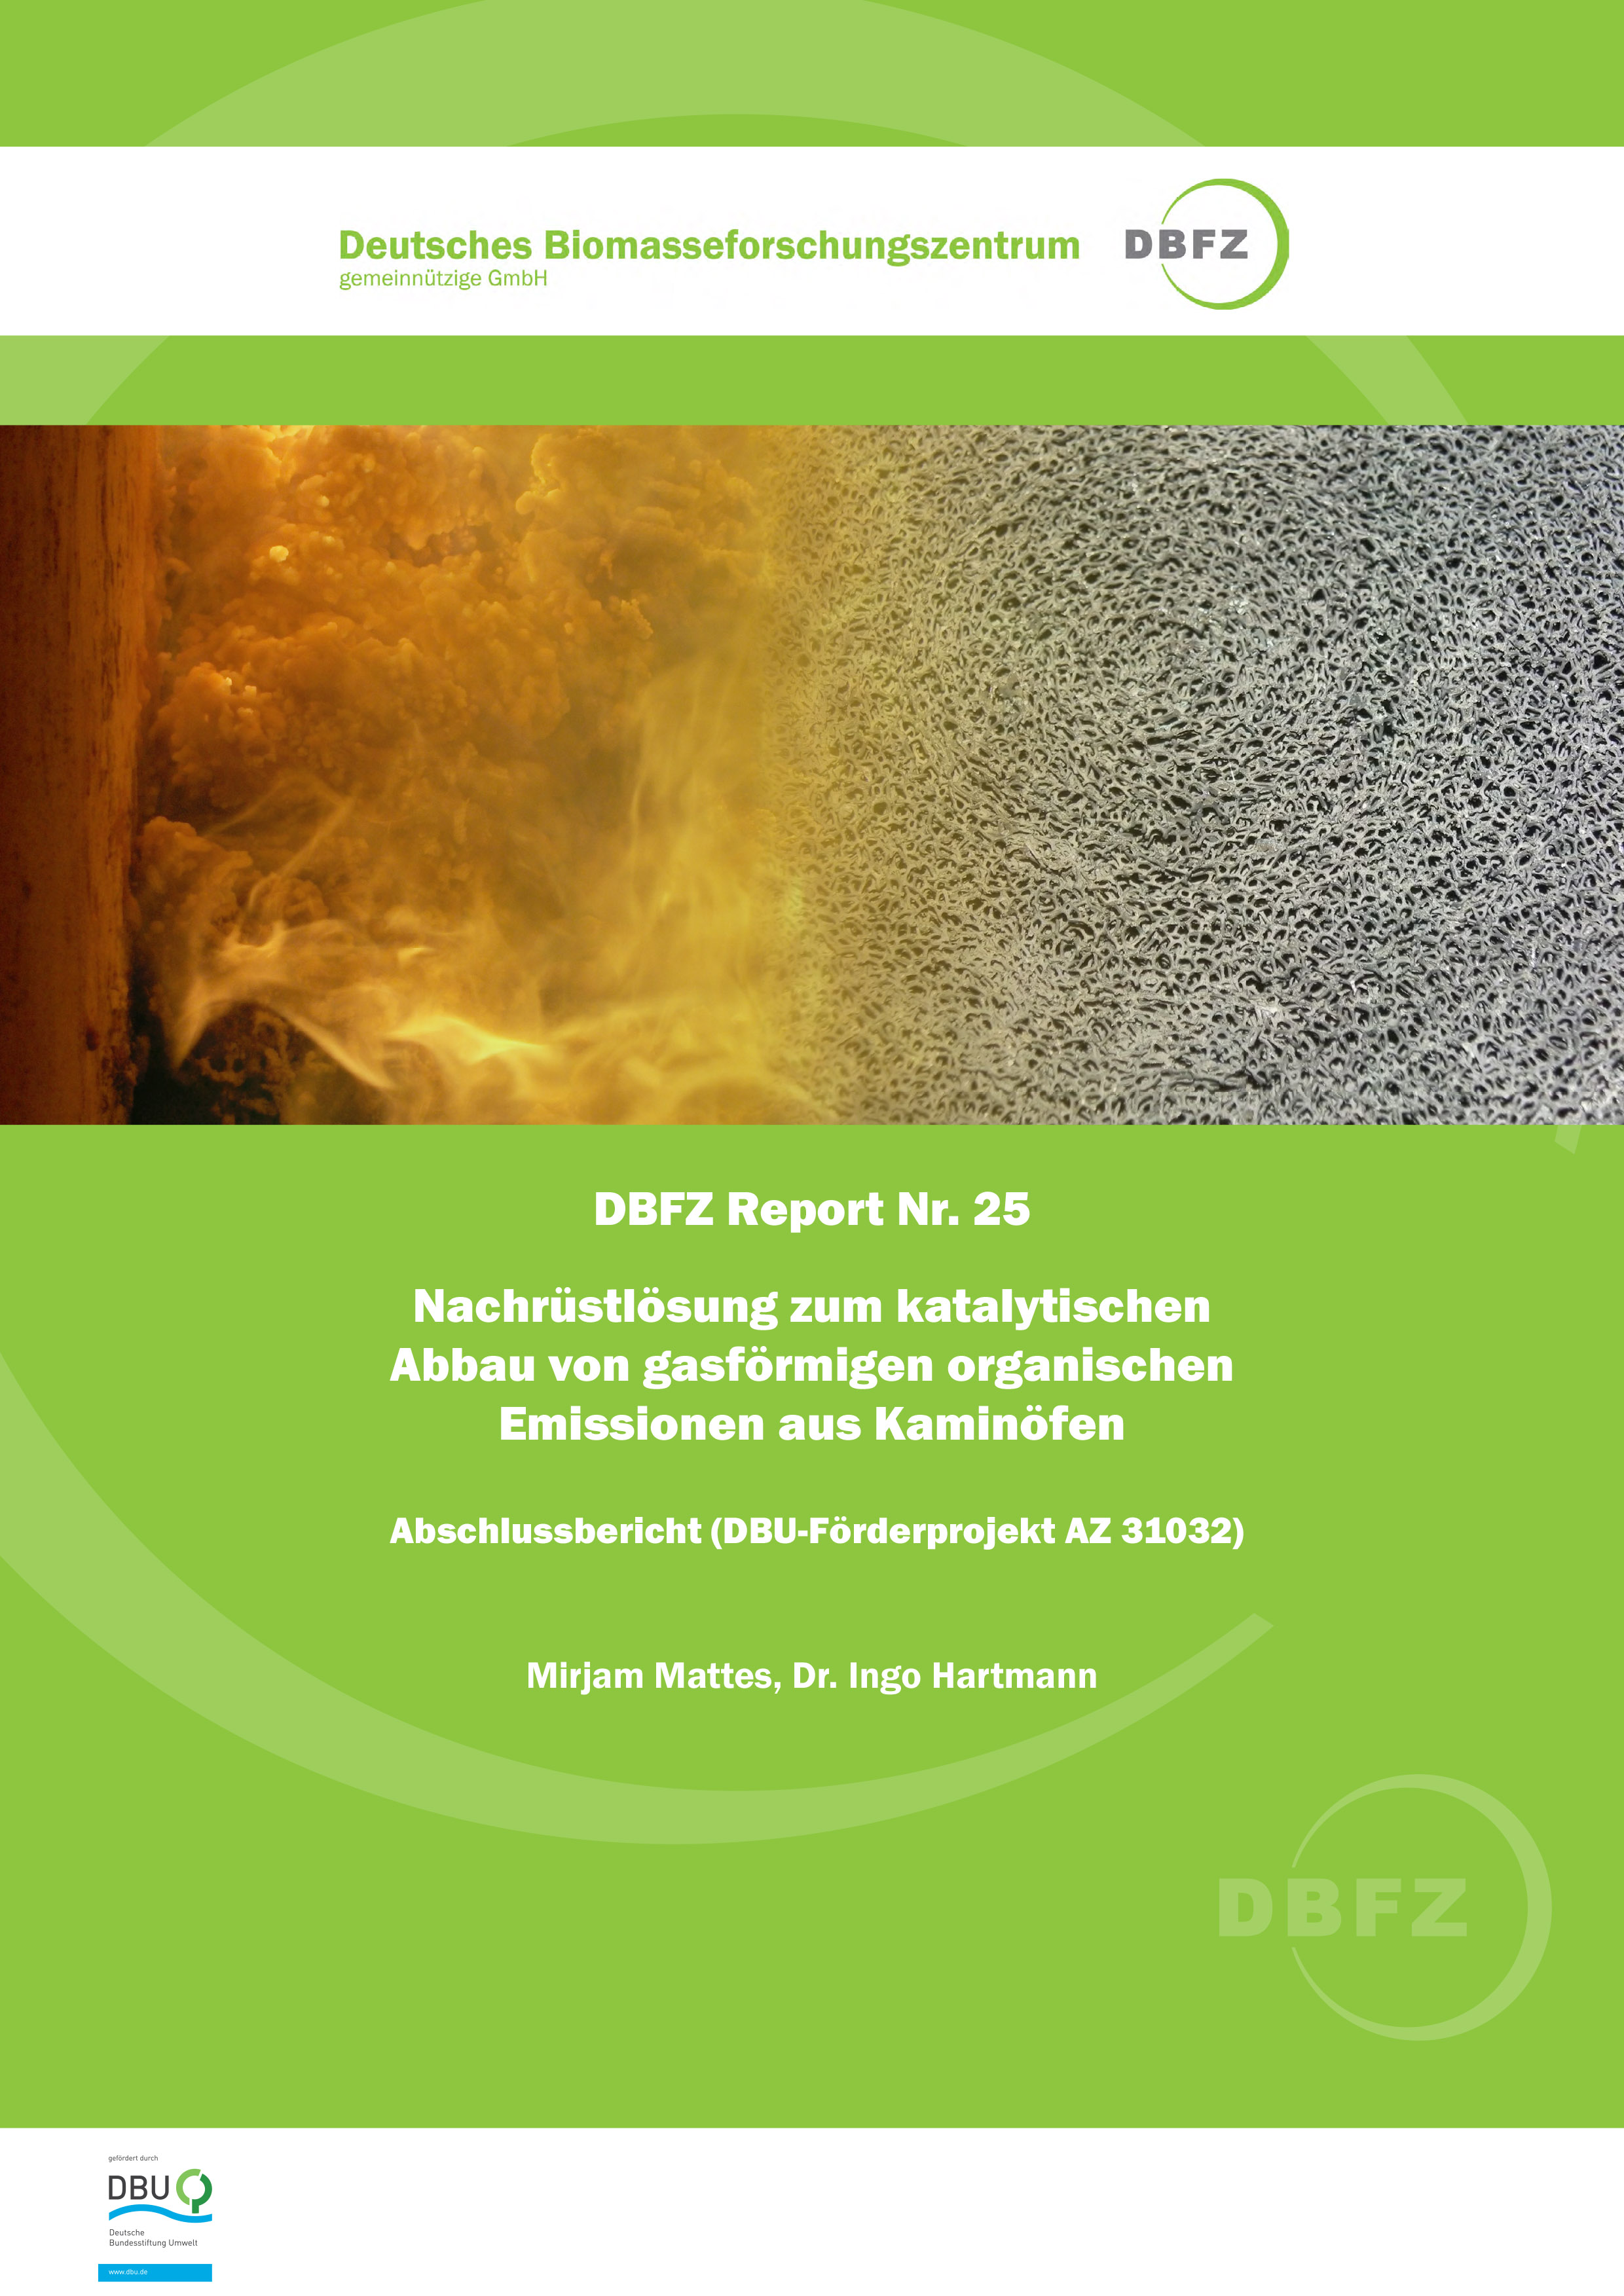 DBFZ Report Nr. 25